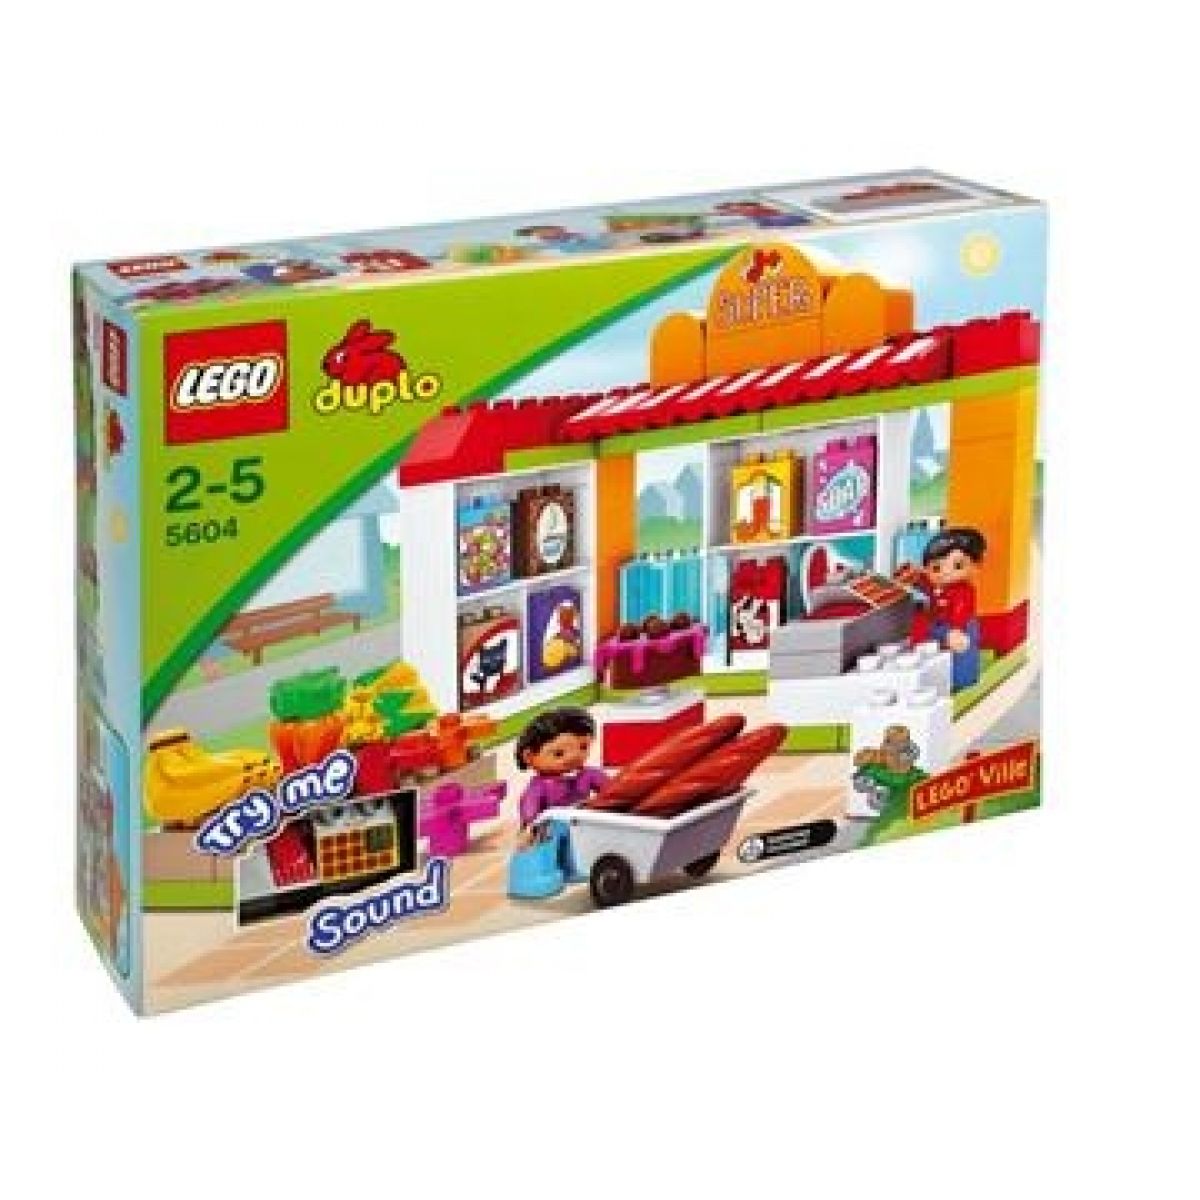 LEGO DUPLO 5604 Supermarket